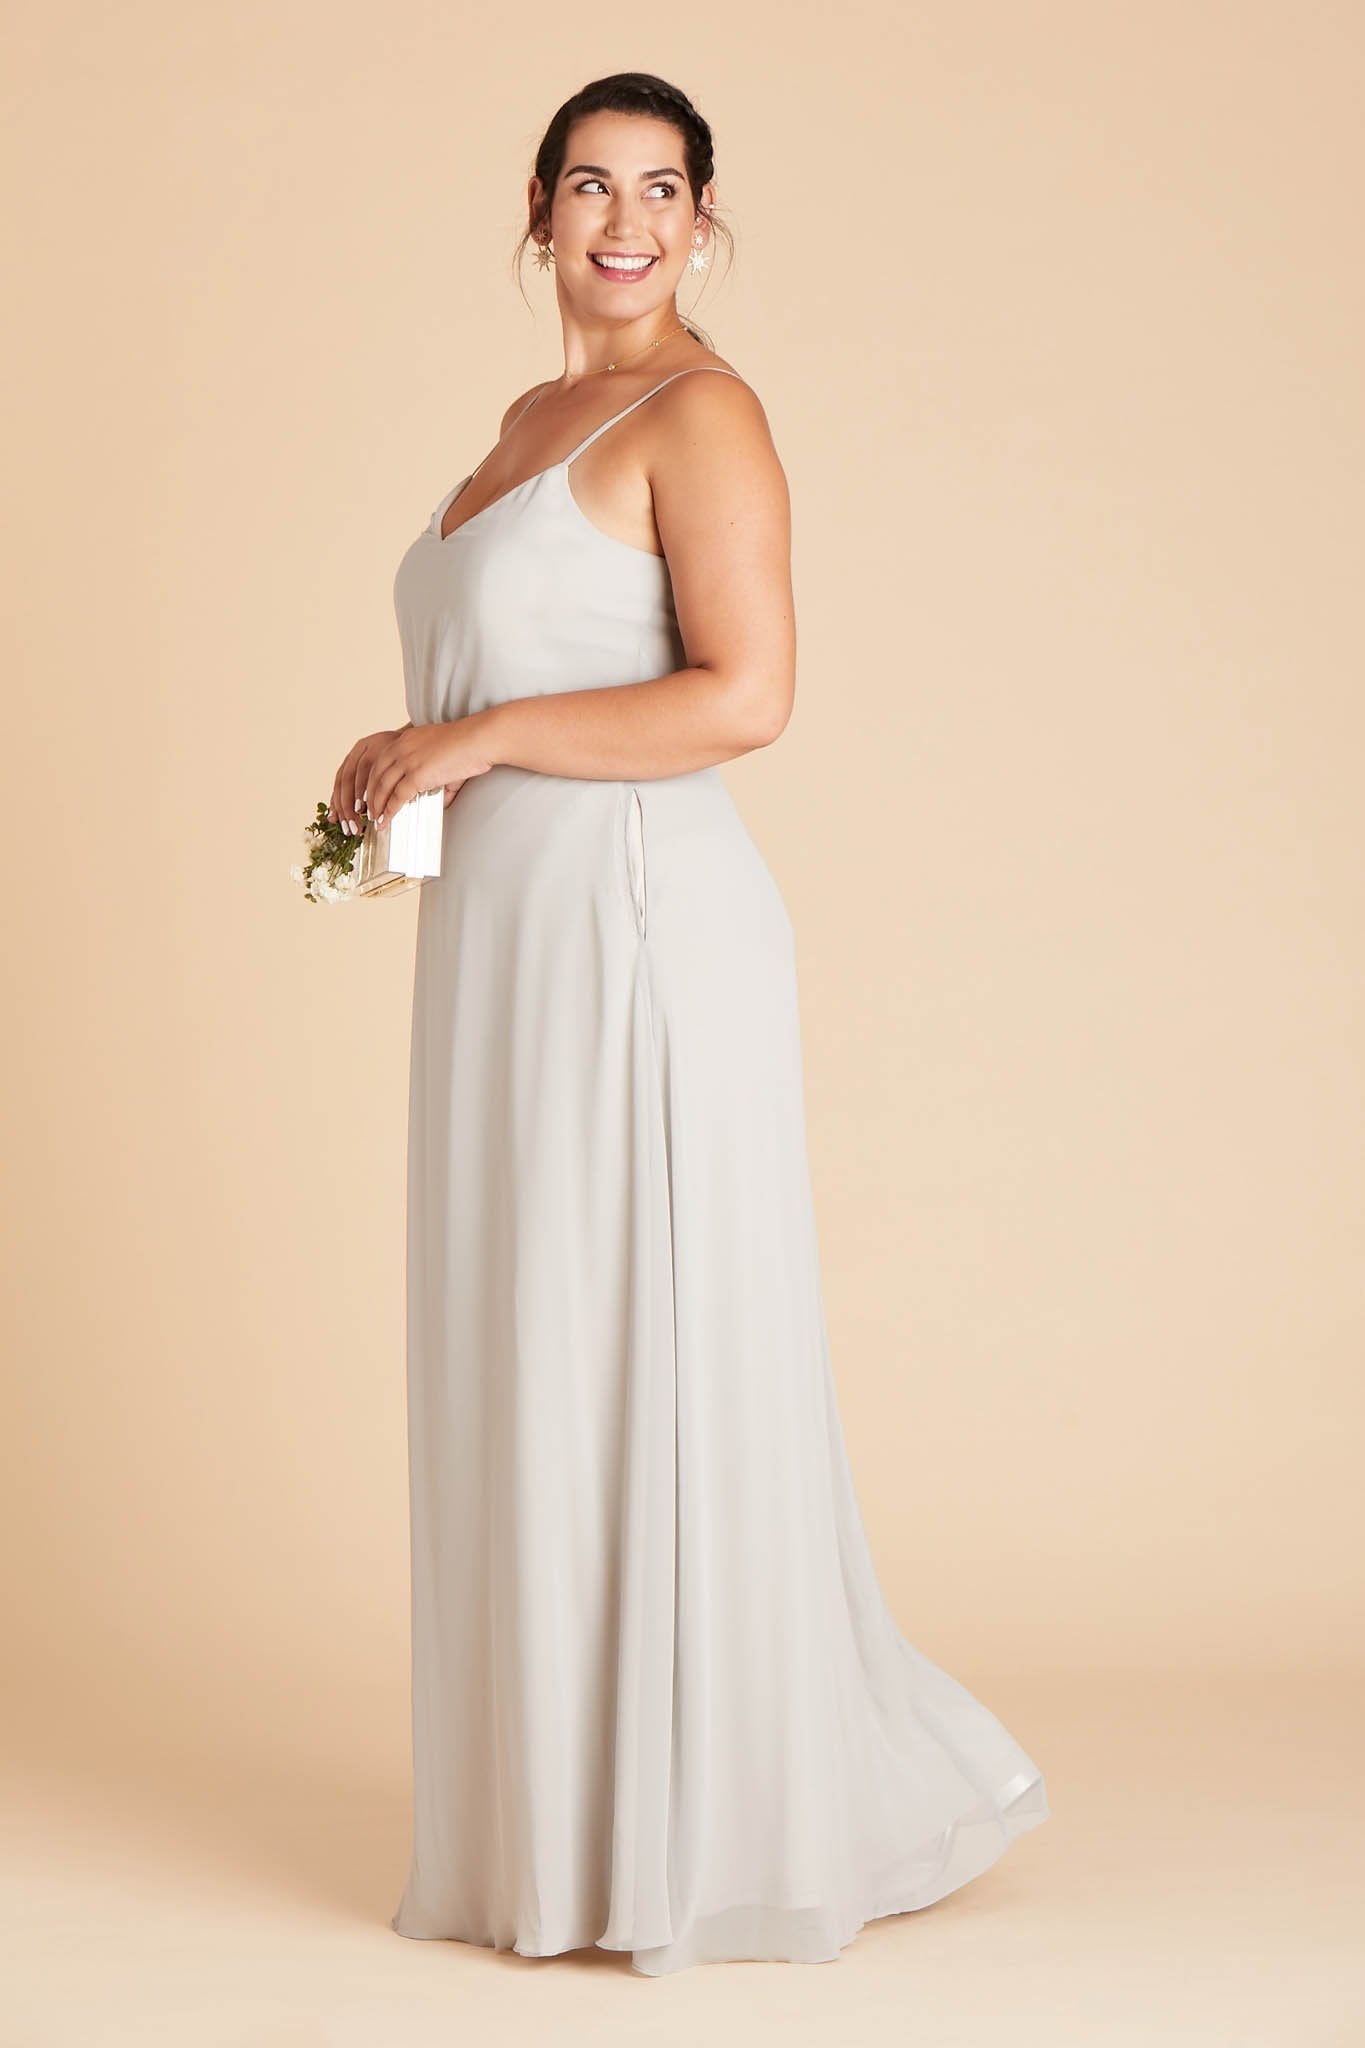 Gwennie plus size bridesmaid dress in dove gray chiffon by Birdy Grey, side view